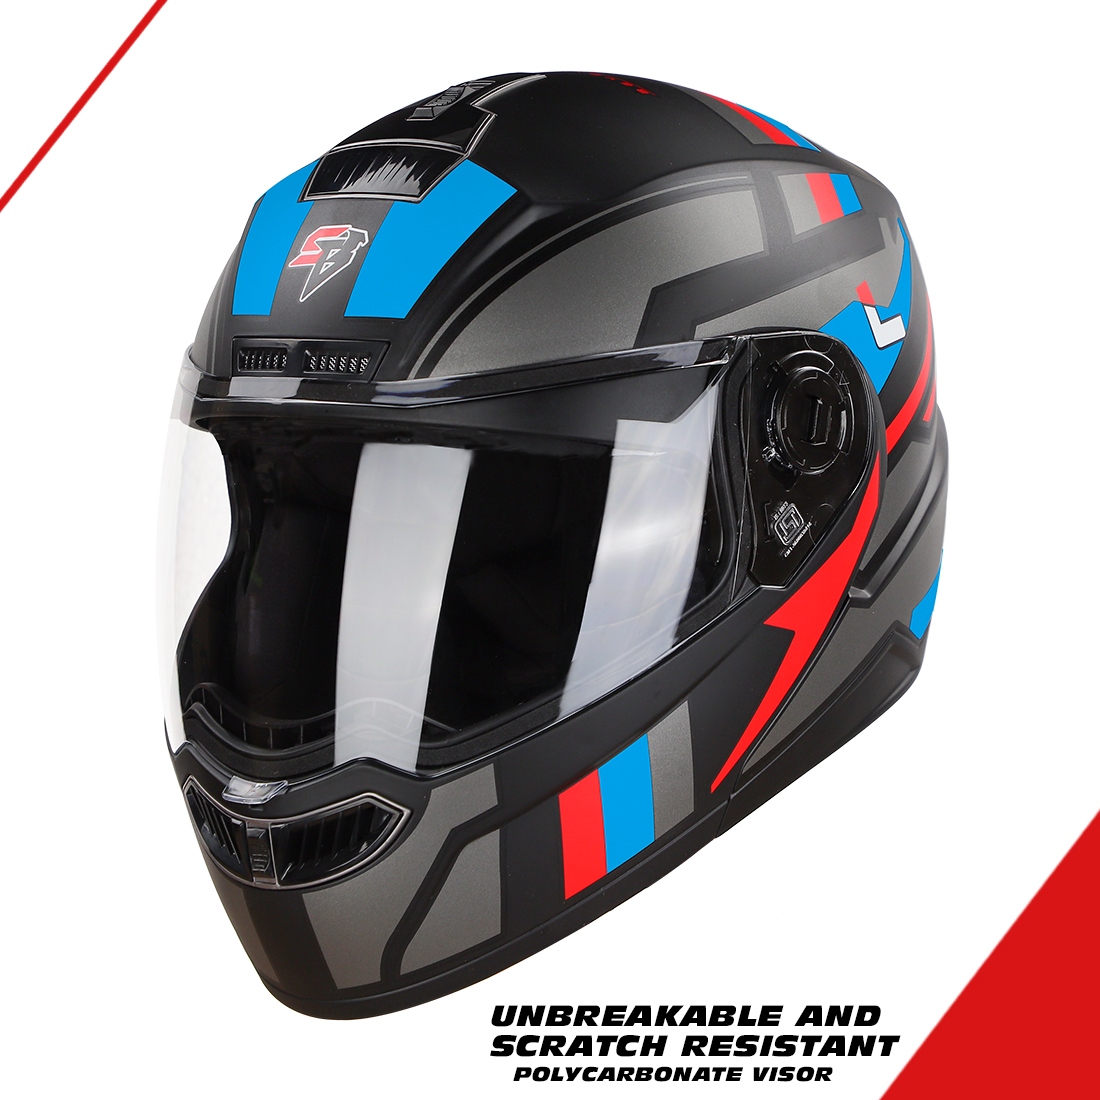 Steelbird SBA-7 Beyond Limit ISI Certified Flip-Up Helmet For Men And Women (Matt Black Blue With Clear Visor)